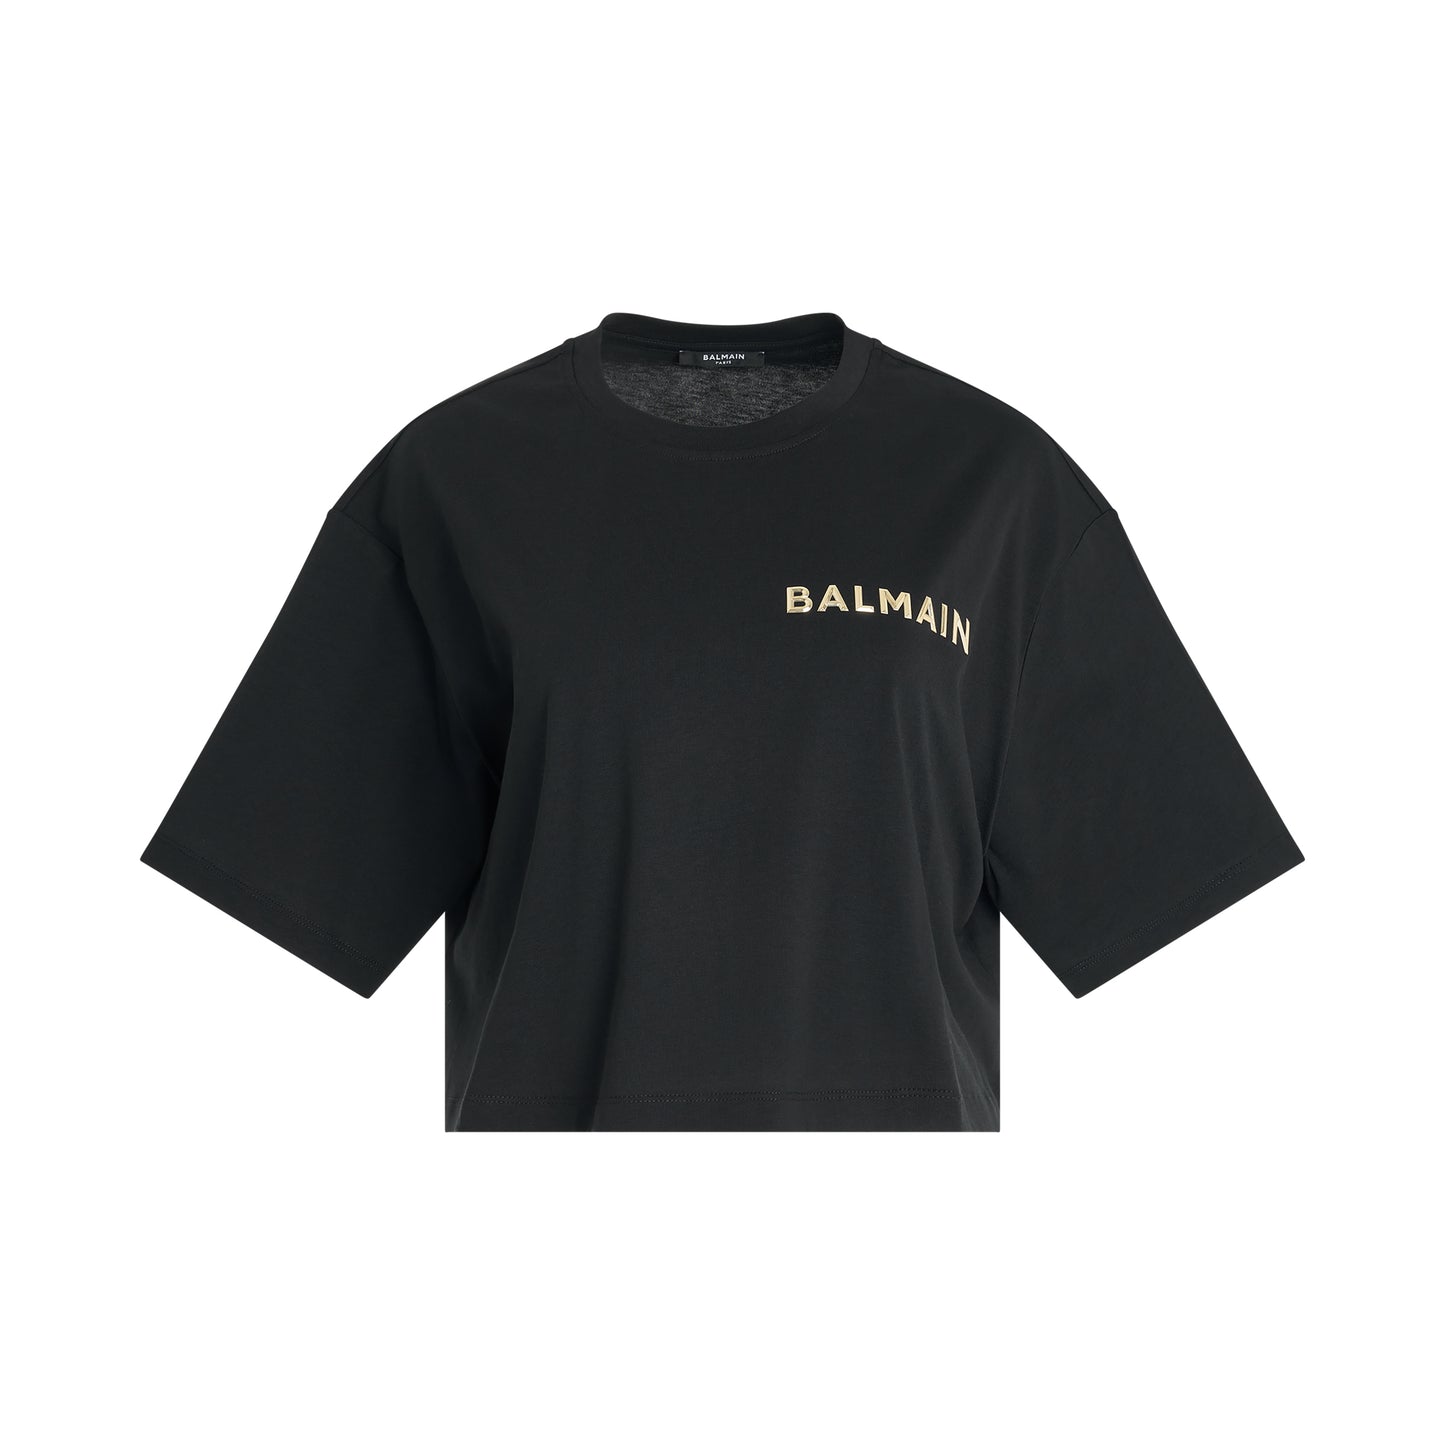 Balmain Laminated Crop T-Shirt in Black/Gold